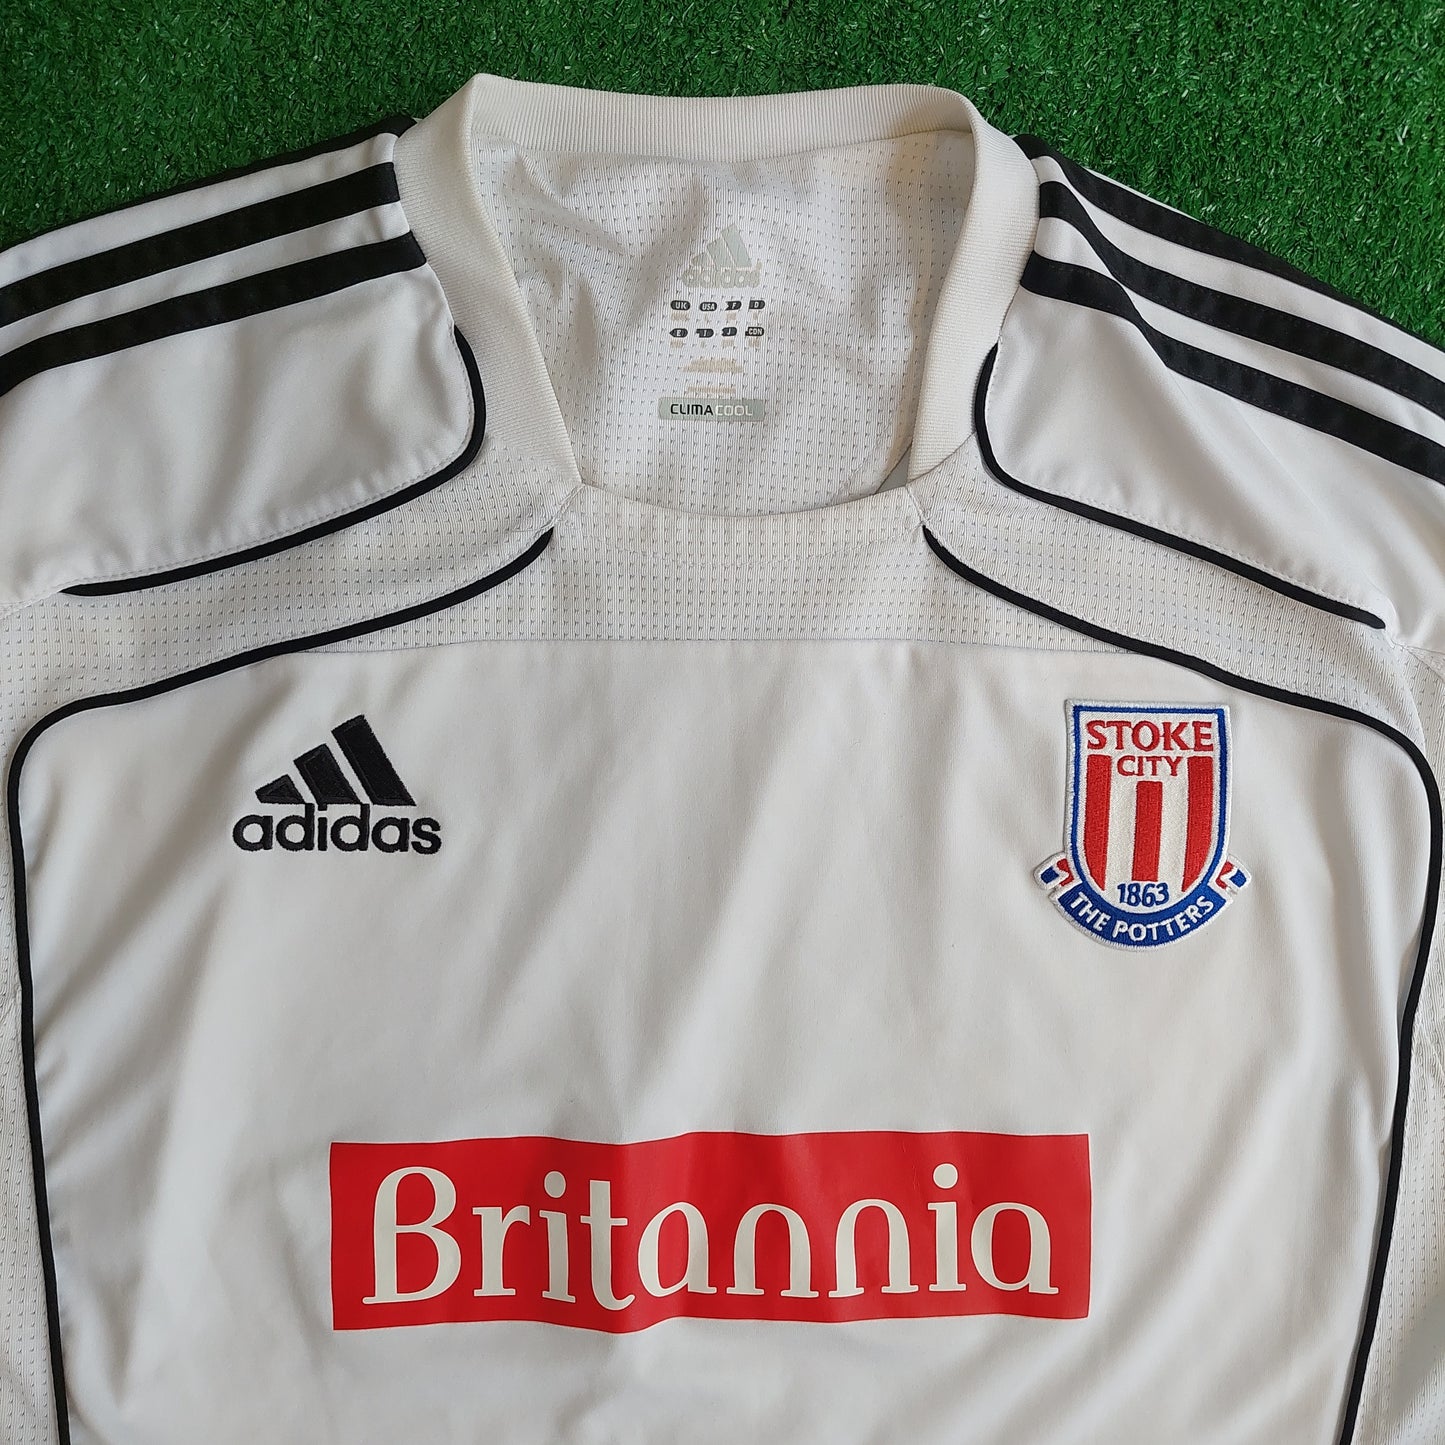 Stoke City 2010/12 Training Shirt (Very Good) - Size L (44/46")